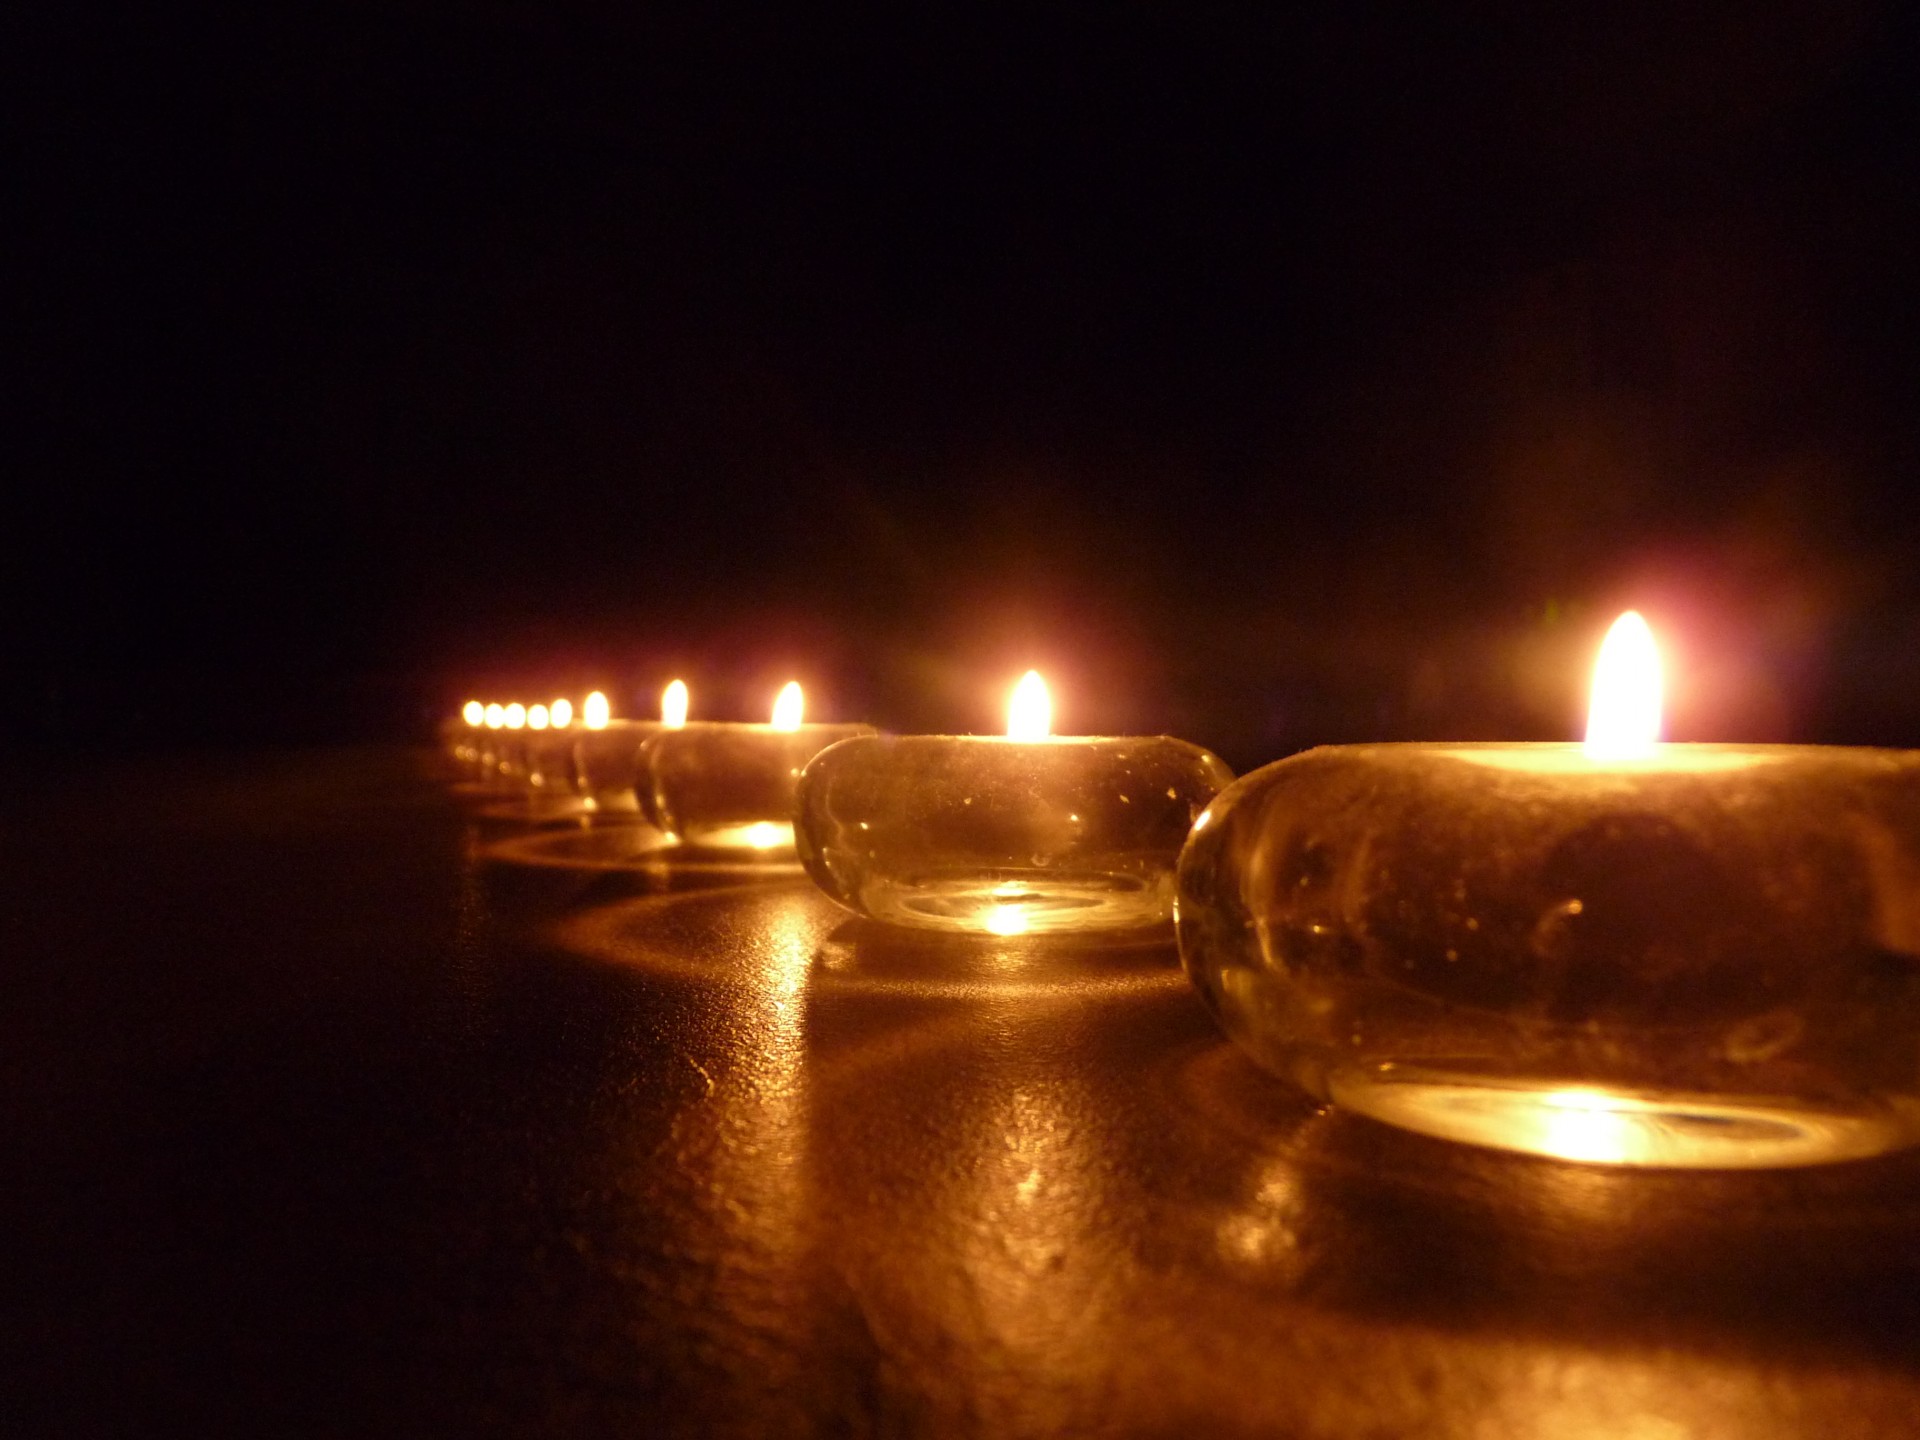 Фото свечи в темноте. Свечи. Свеча в темноте. Много свечей. Свеча горит в темноте.